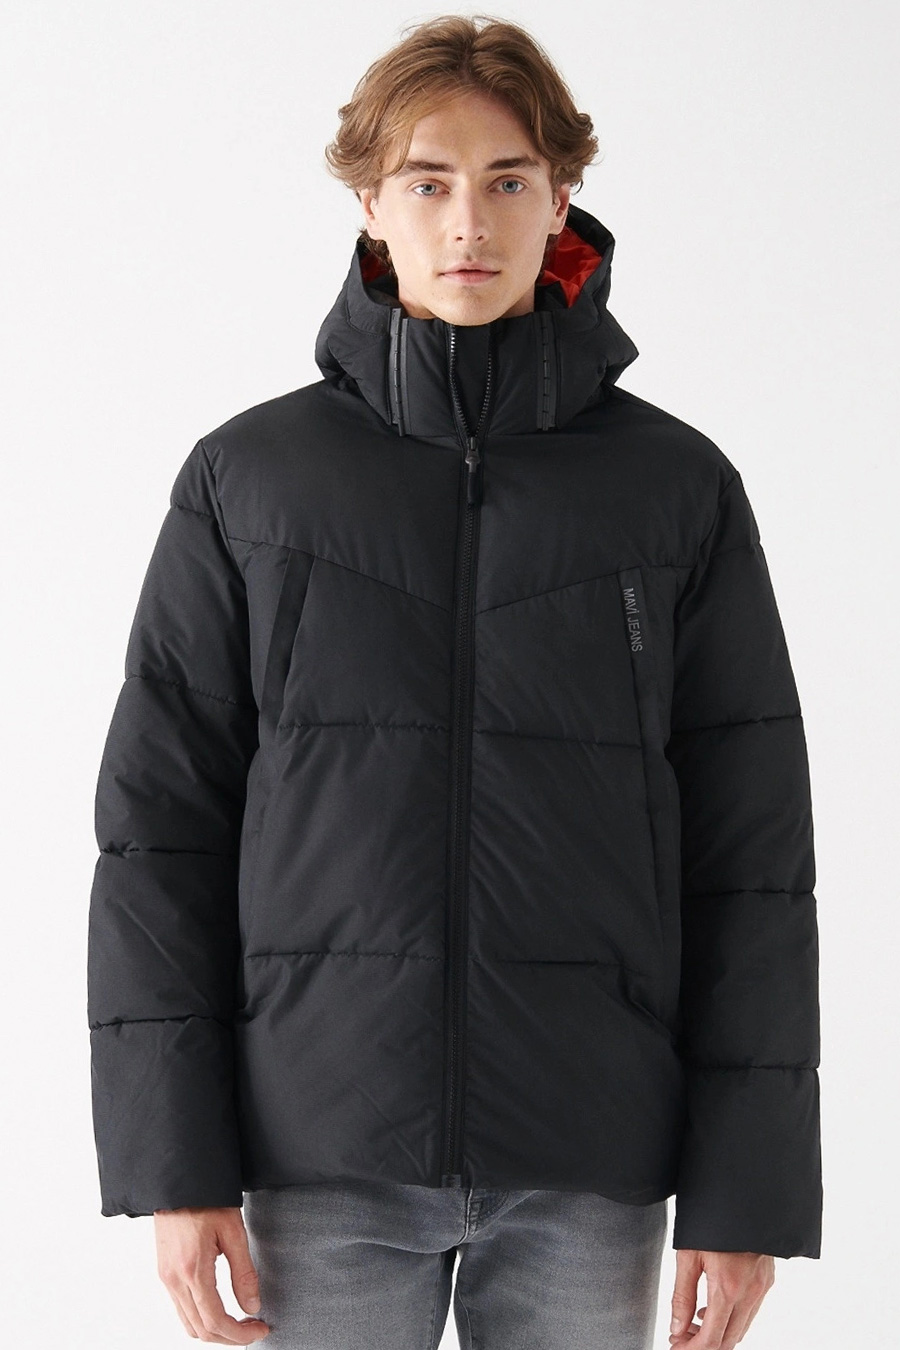 Winter jacket MAVI 0110068-900